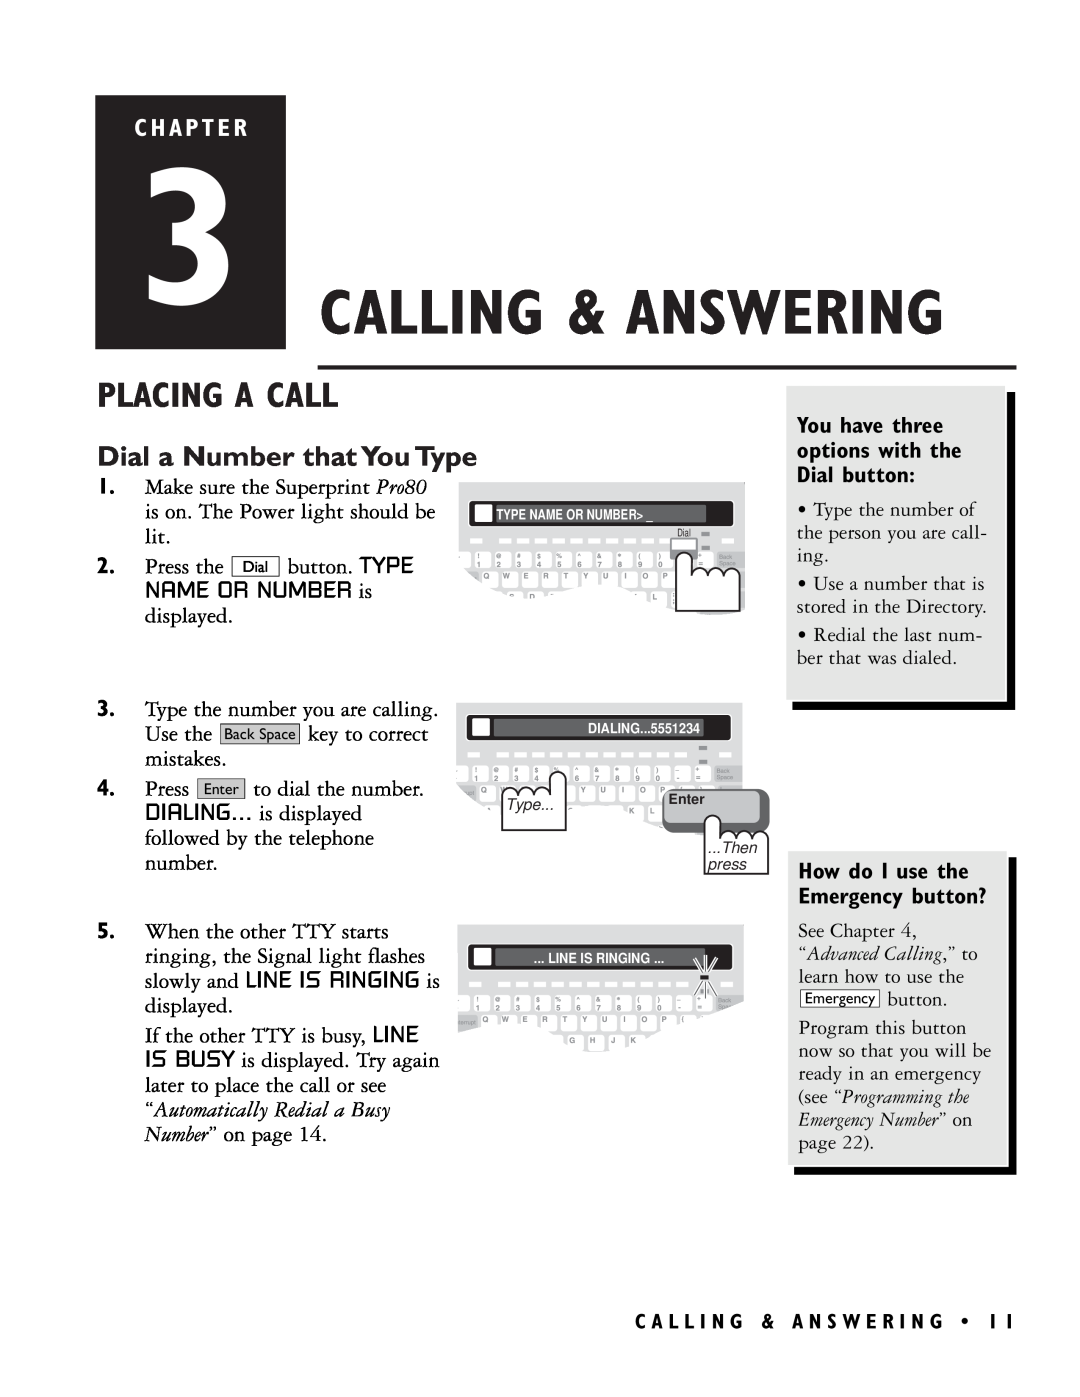 Ultratec PRO80TM manual Calling & Answering, Placing A Call, Dial a Number that You Type, C H A P T E R 